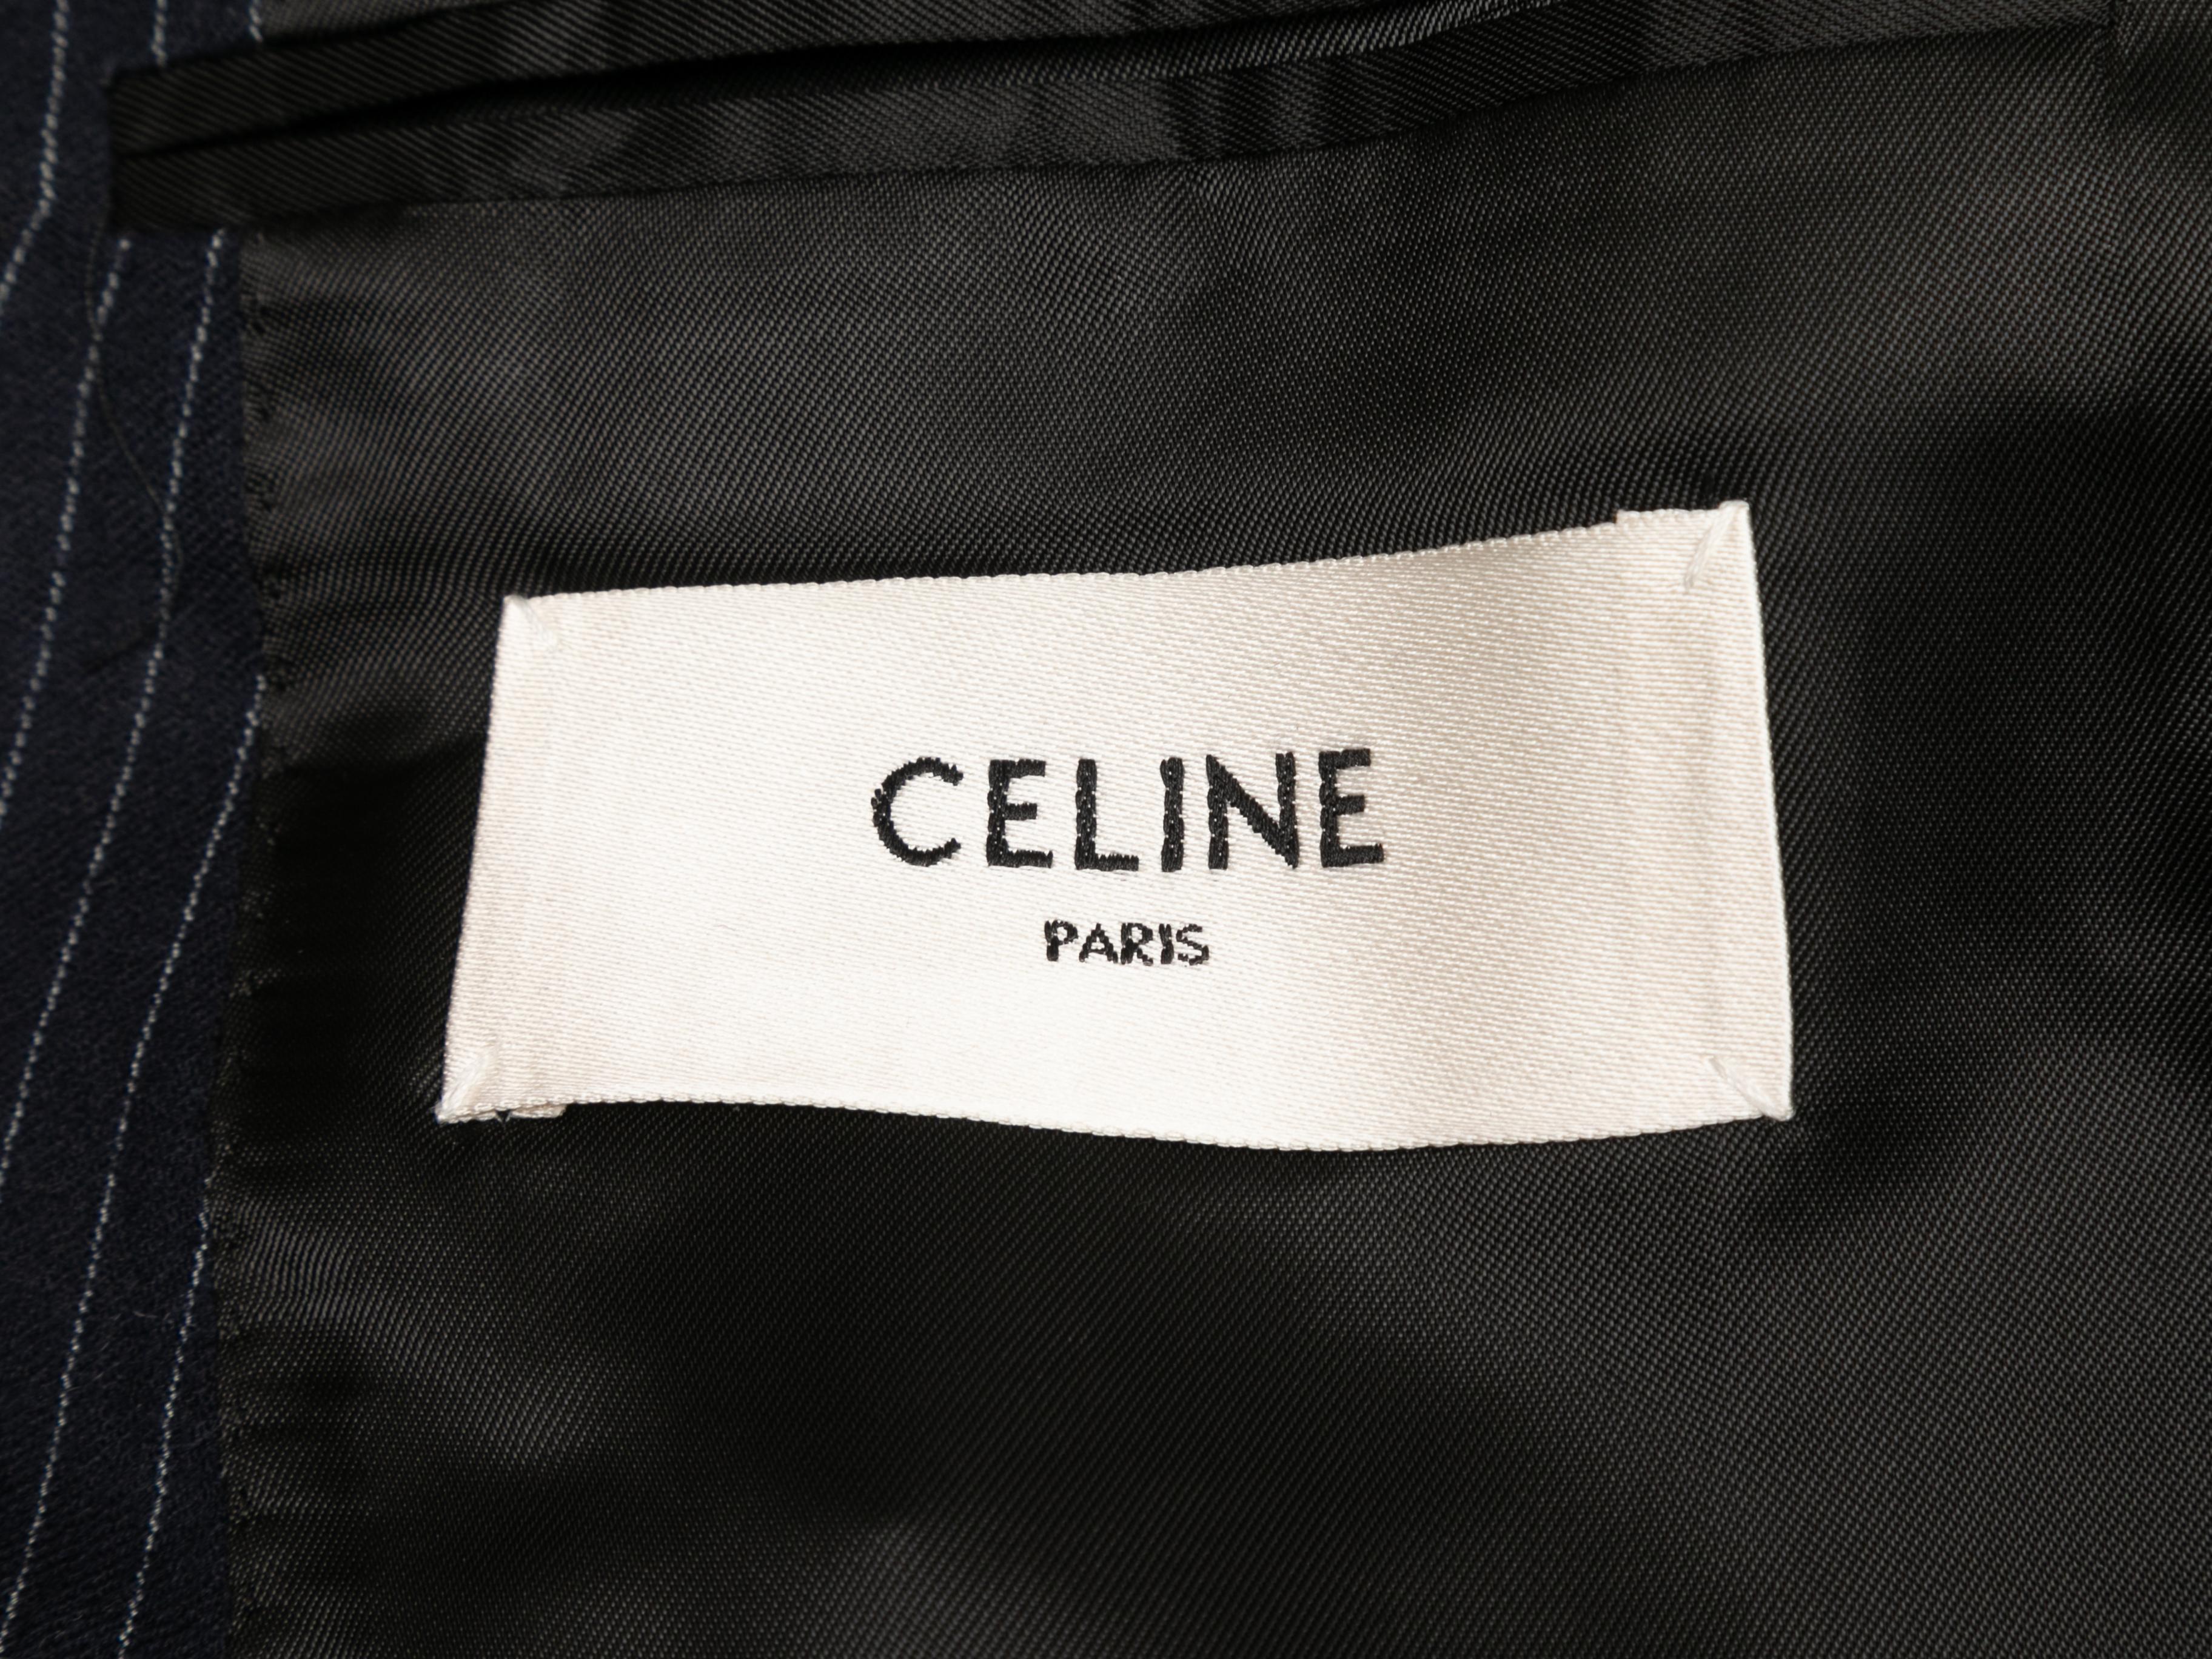 Black & White Celine Hedi Slimane Pinstriped Blazer 1